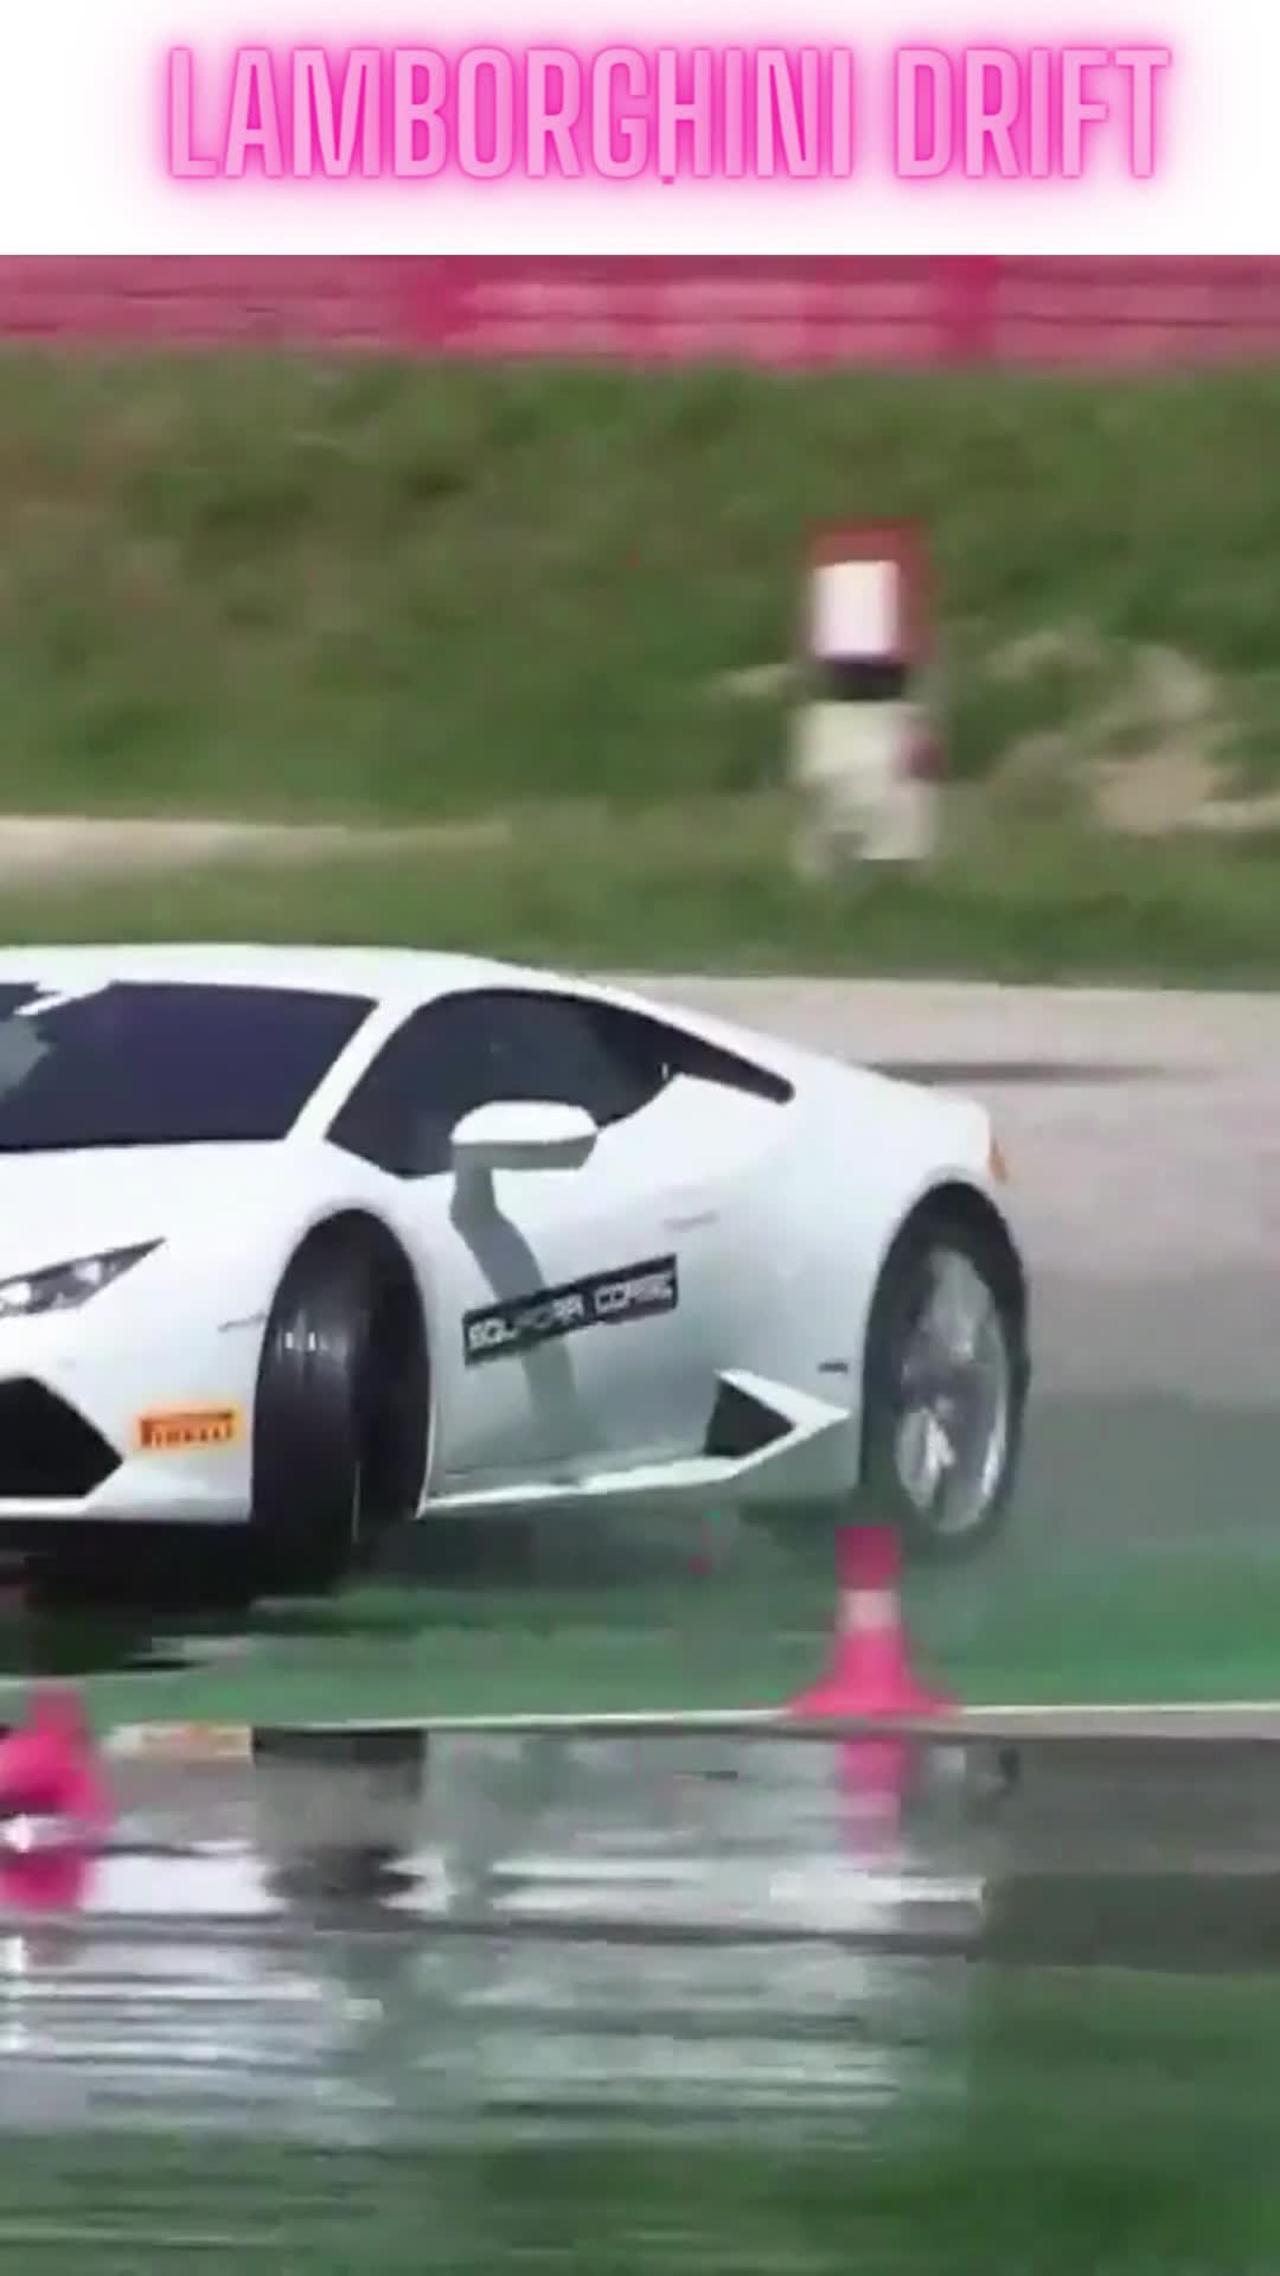 Lamborghini drift